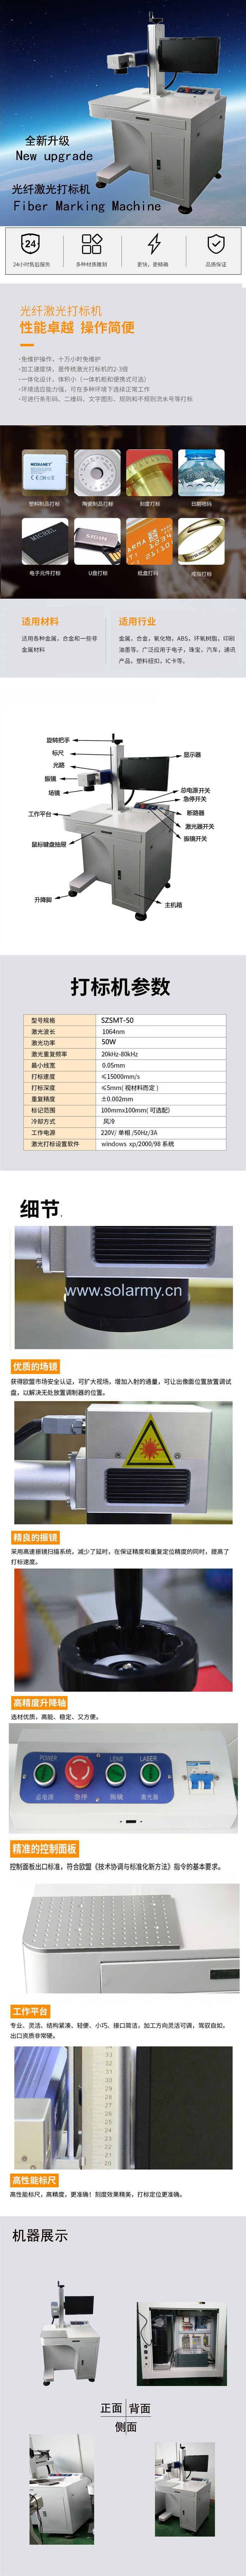 50W标准机光纤中文.jpg